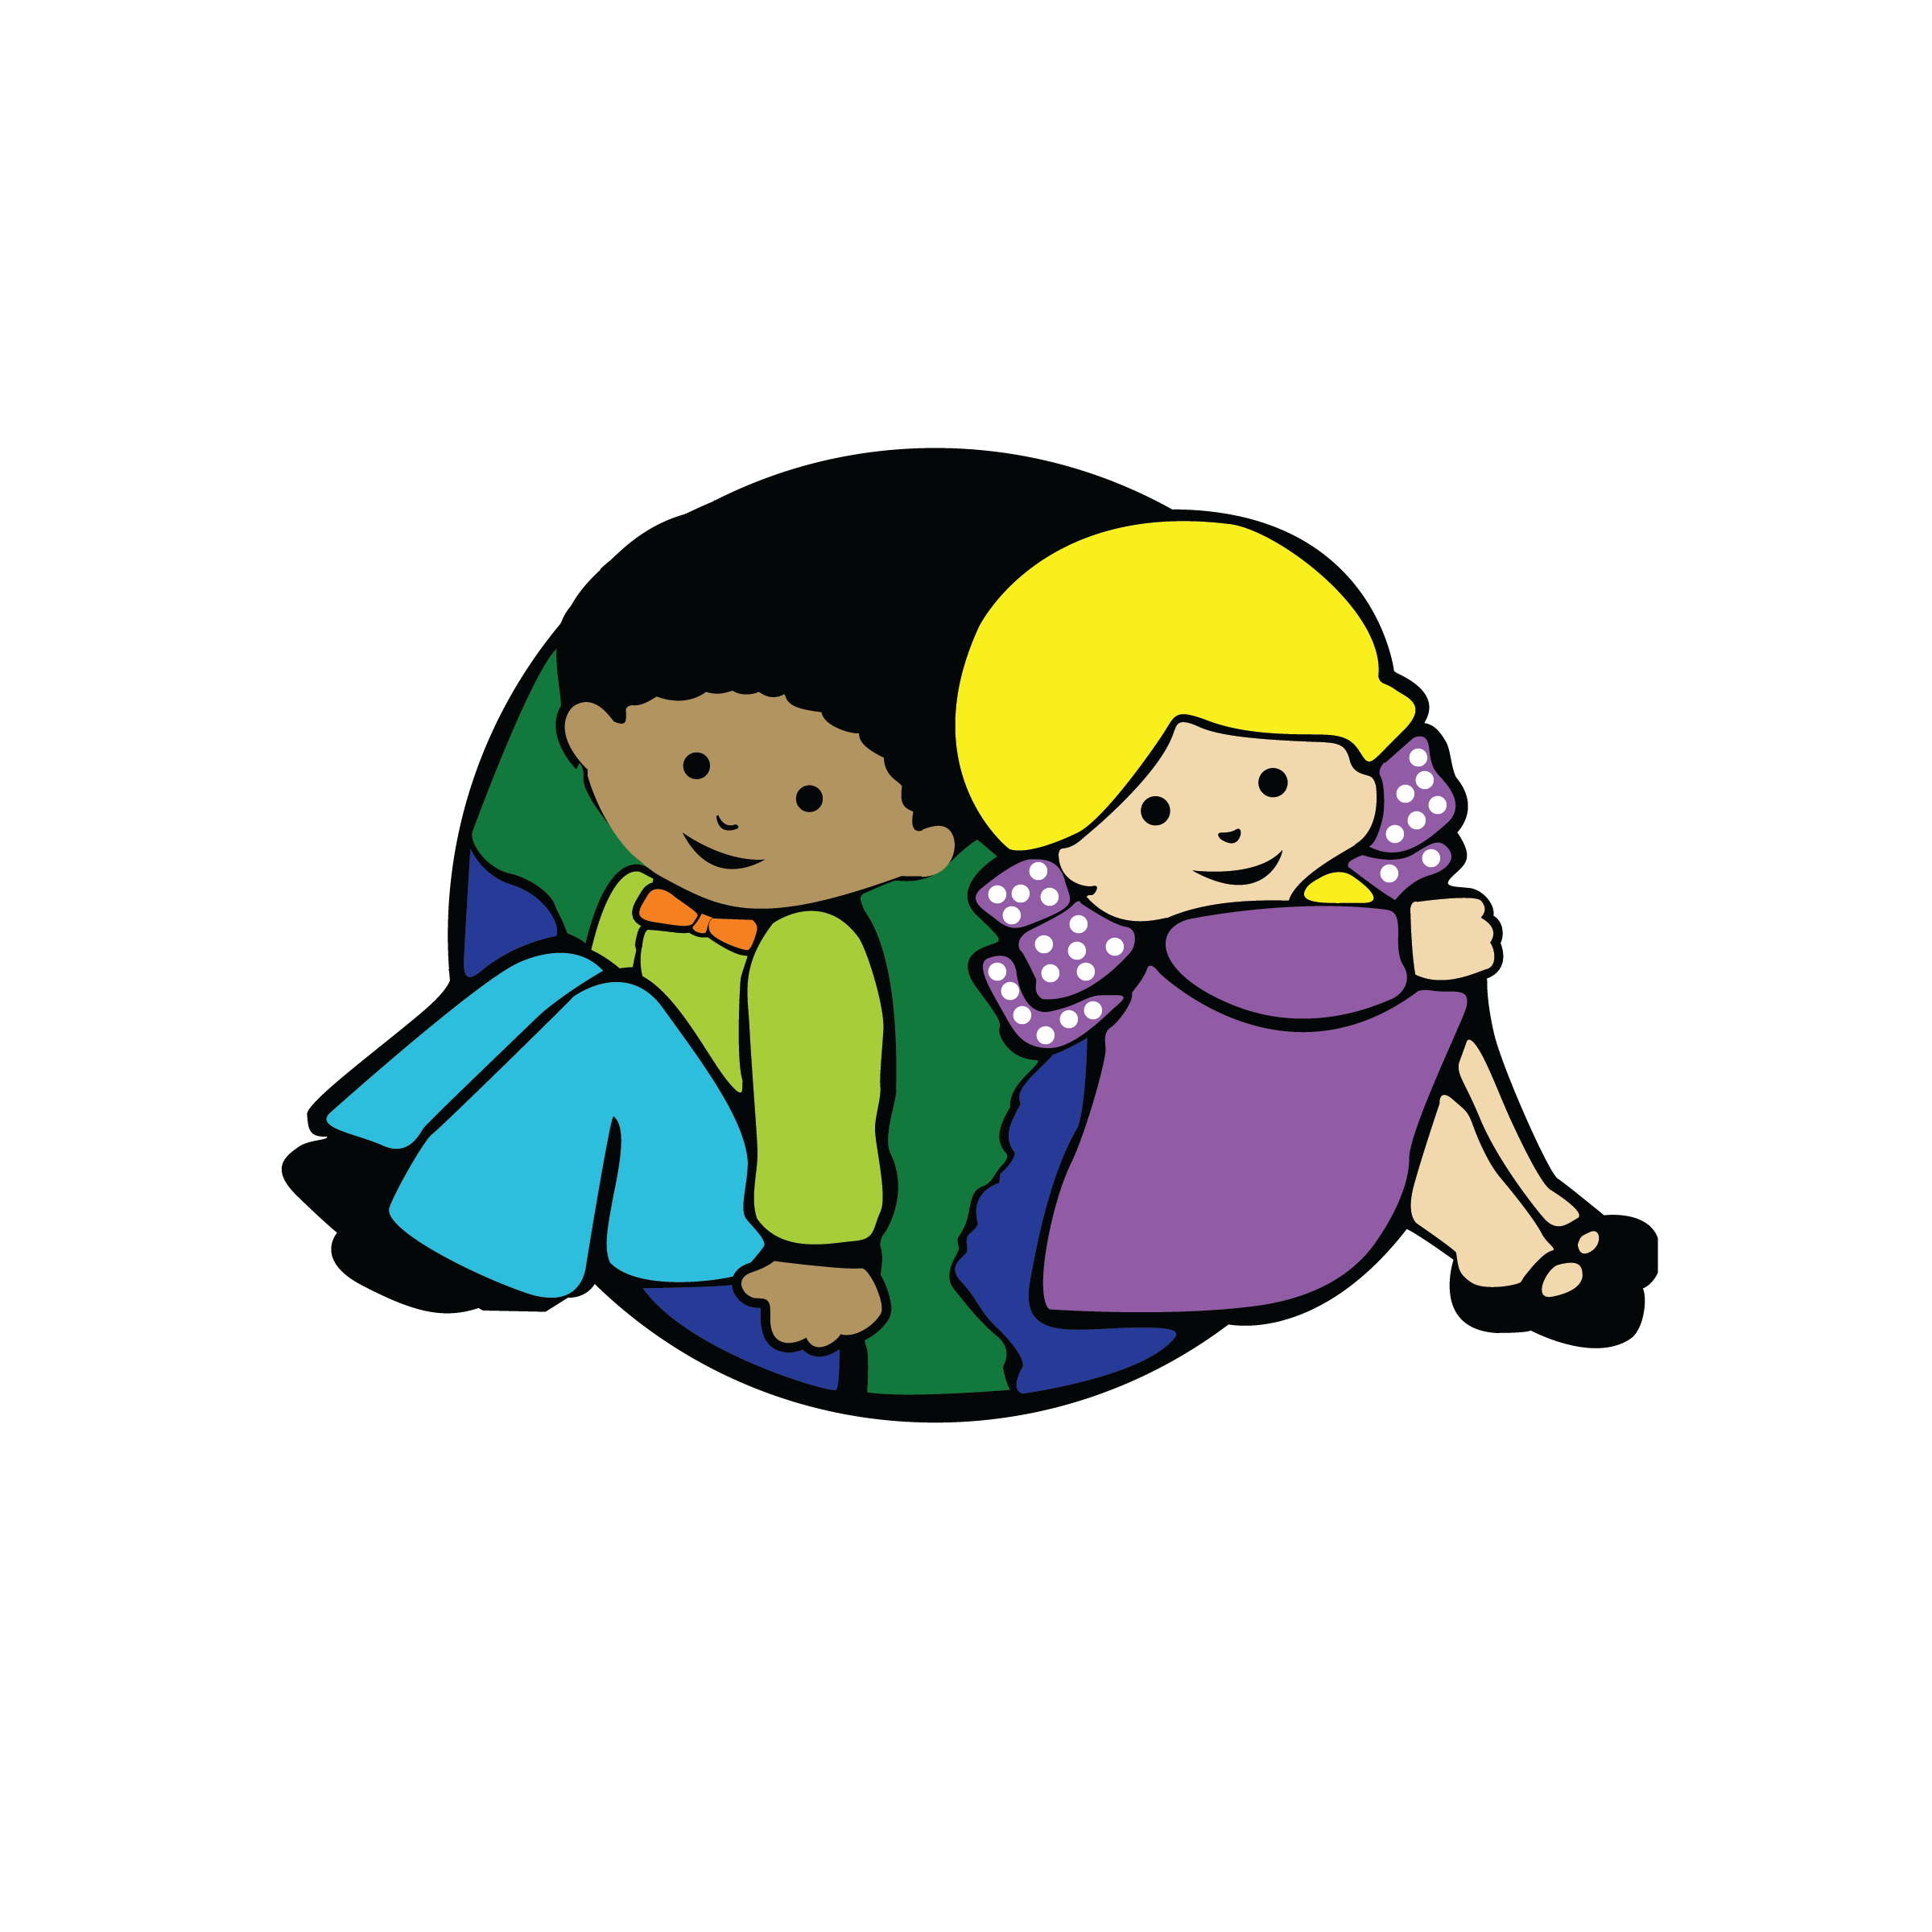 Creative World School